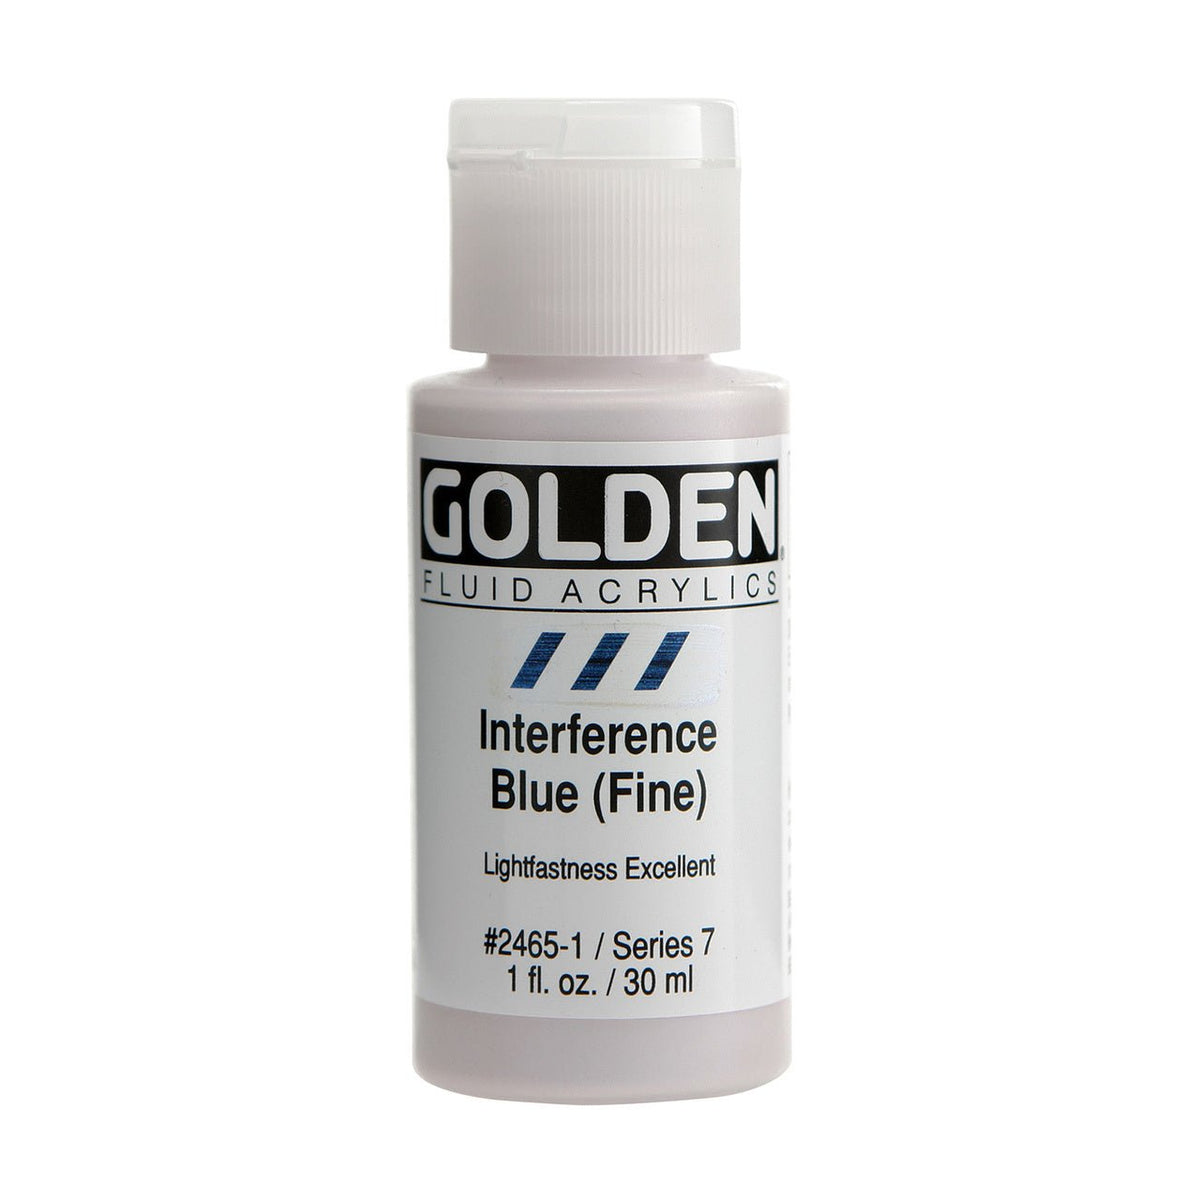 Golden Fluid Acrylic Interference Blue (fine) 1 oz - merriartist.com